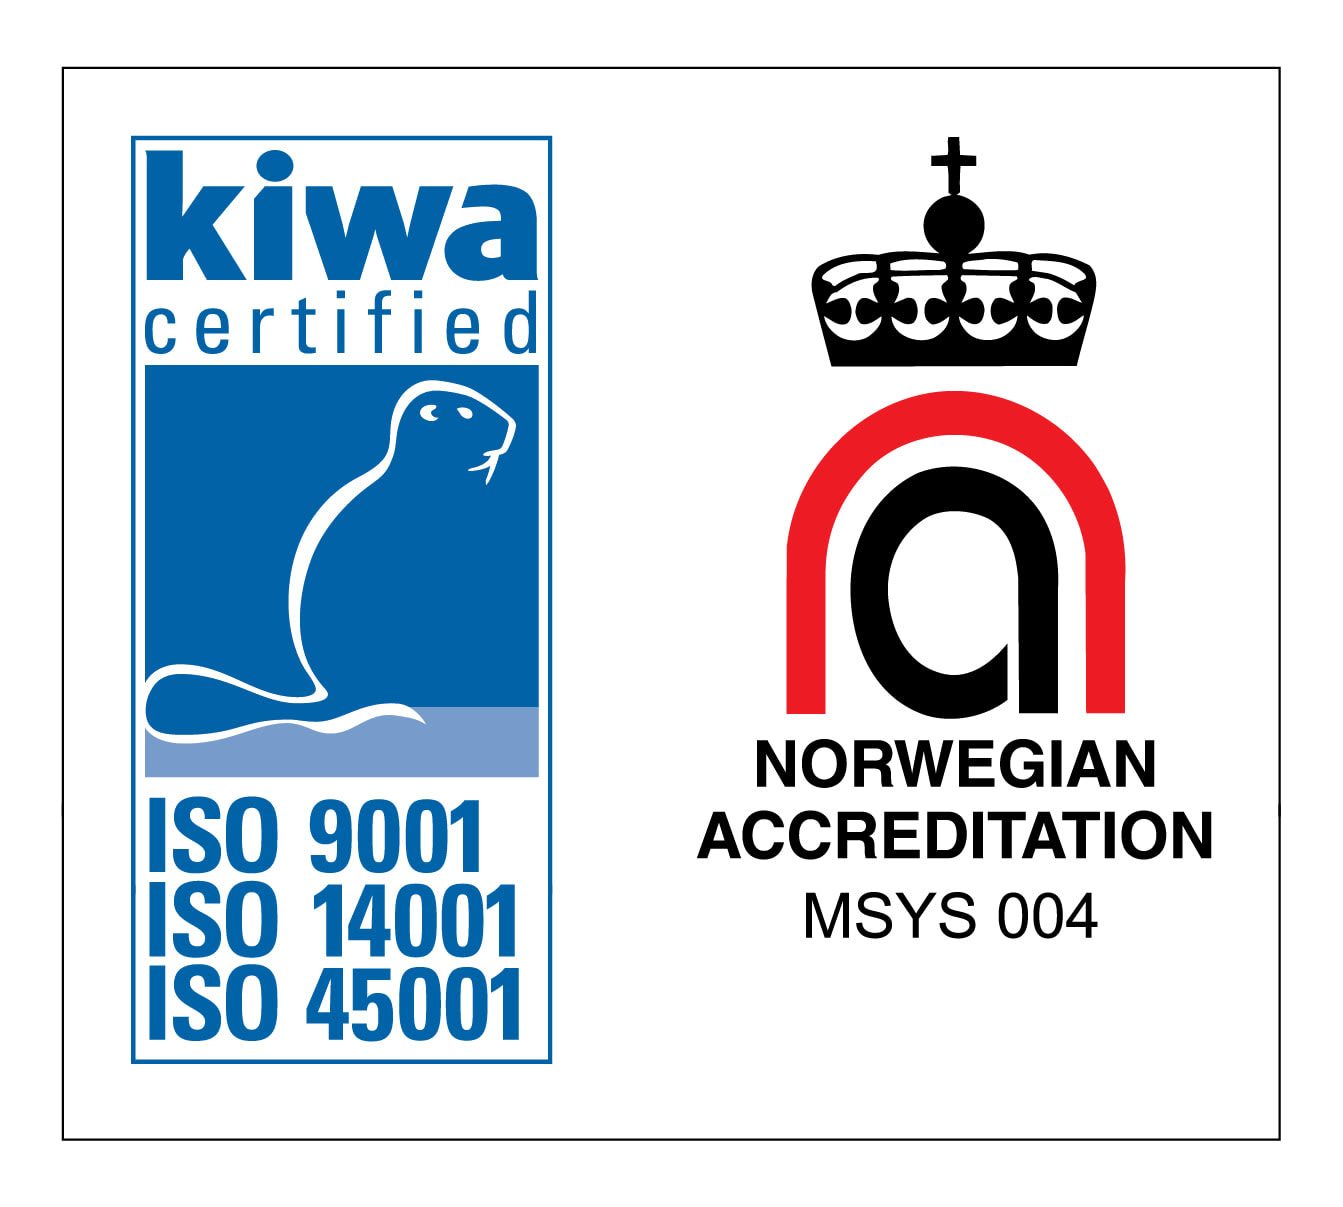 ISO 9001 - ISO 14001 - ISO 45001